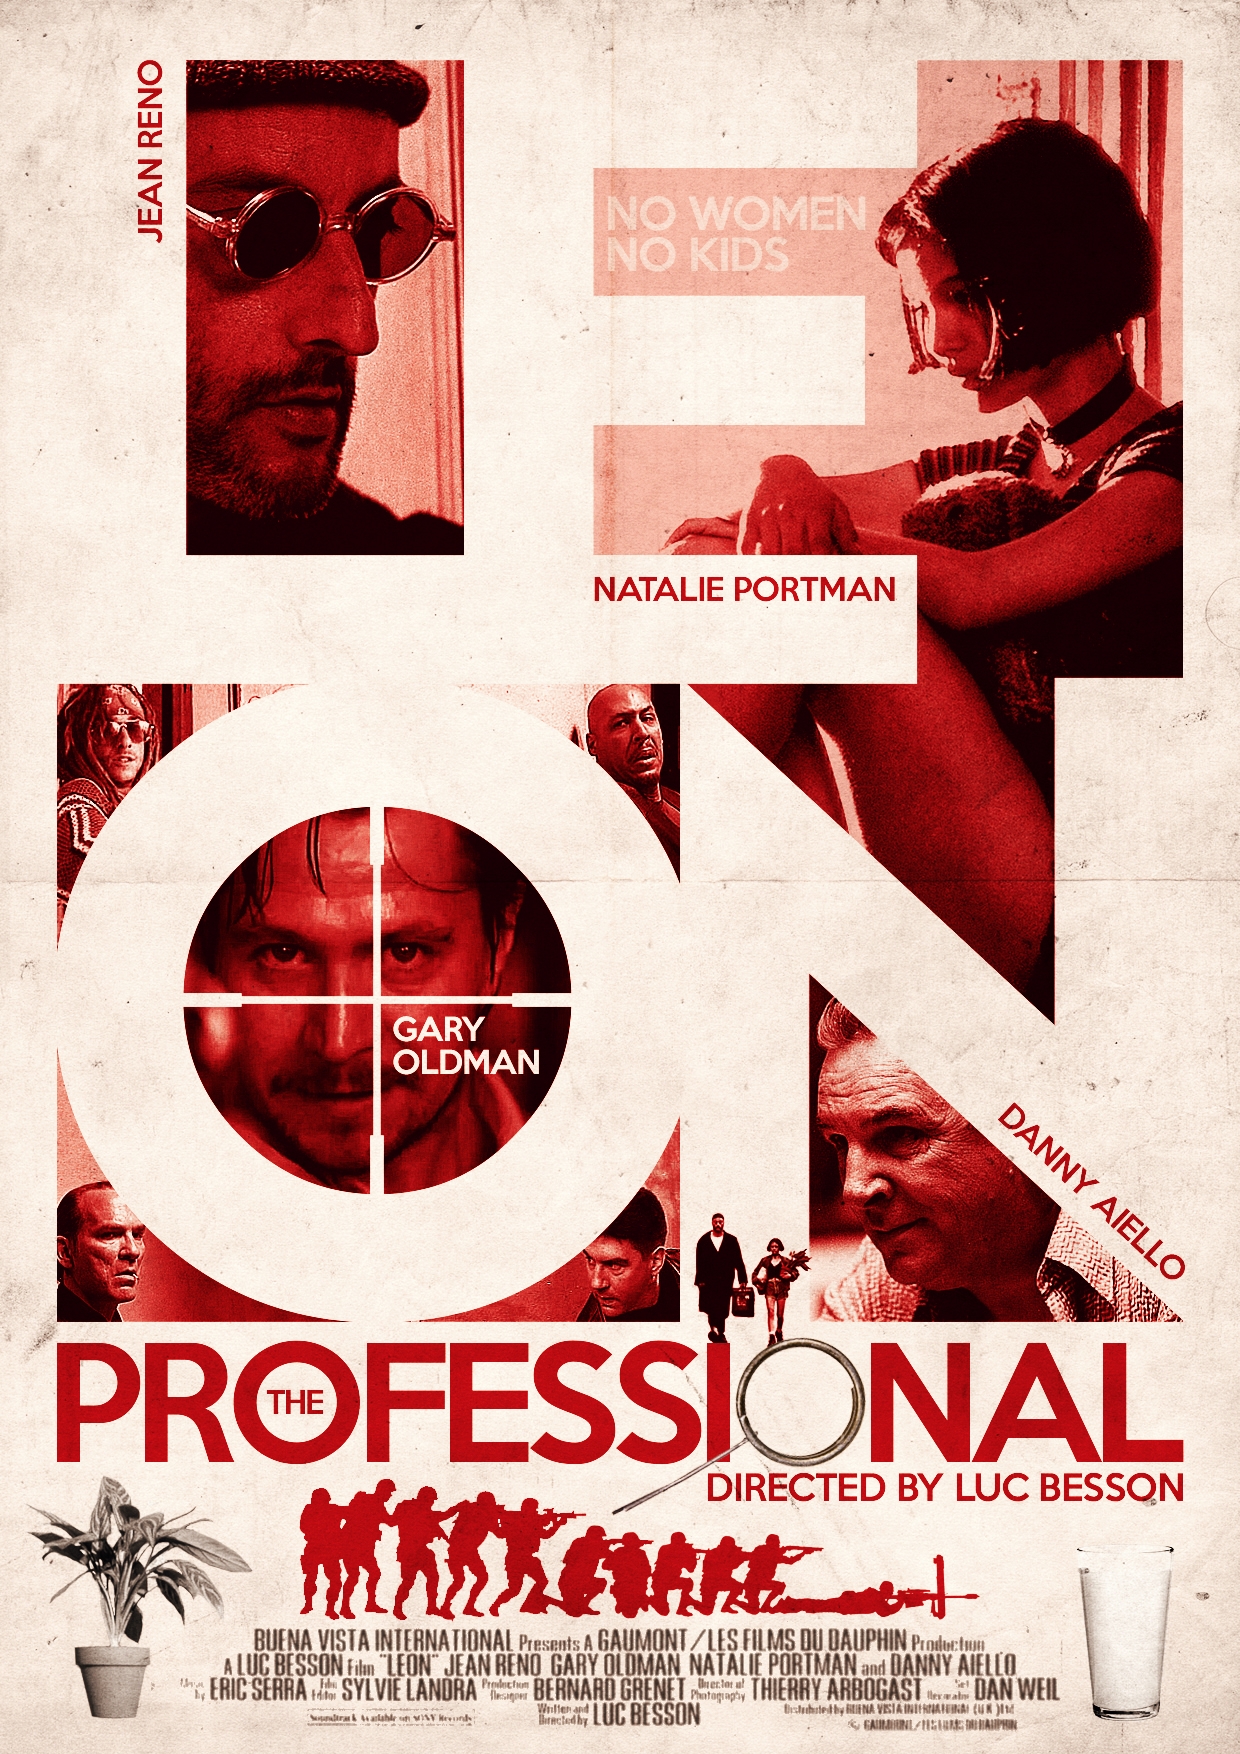 Leon The Professional Alternative Film Poster Design ... - 1240 x 1754 jpeg 1899kB